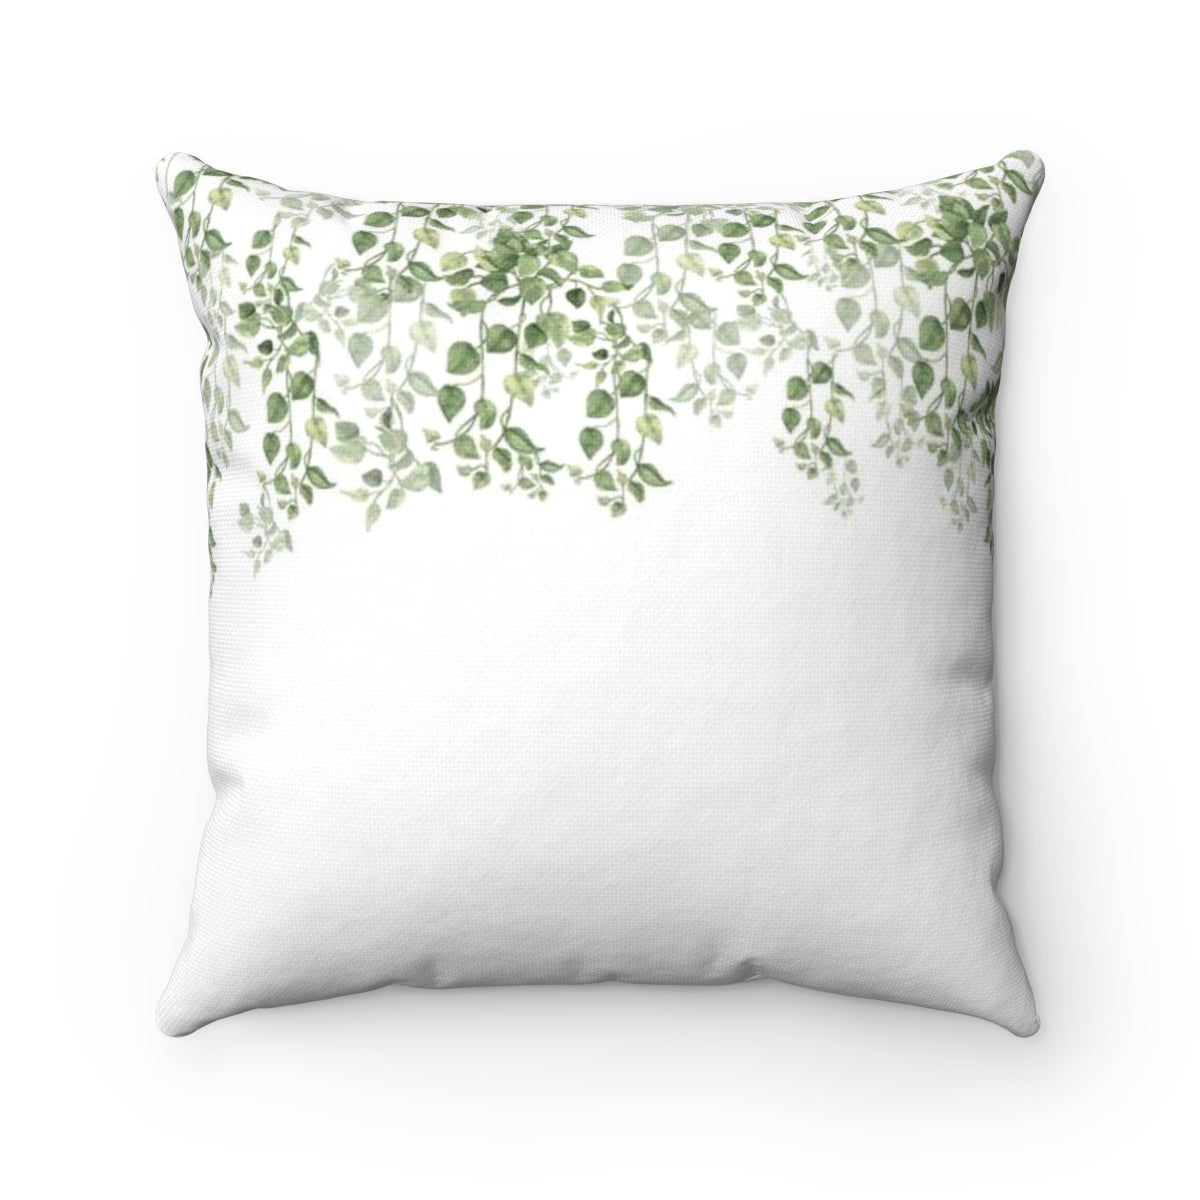 Minimalist Throw Pillows with leaves printed on it - Liz Kapiloto Art & Design